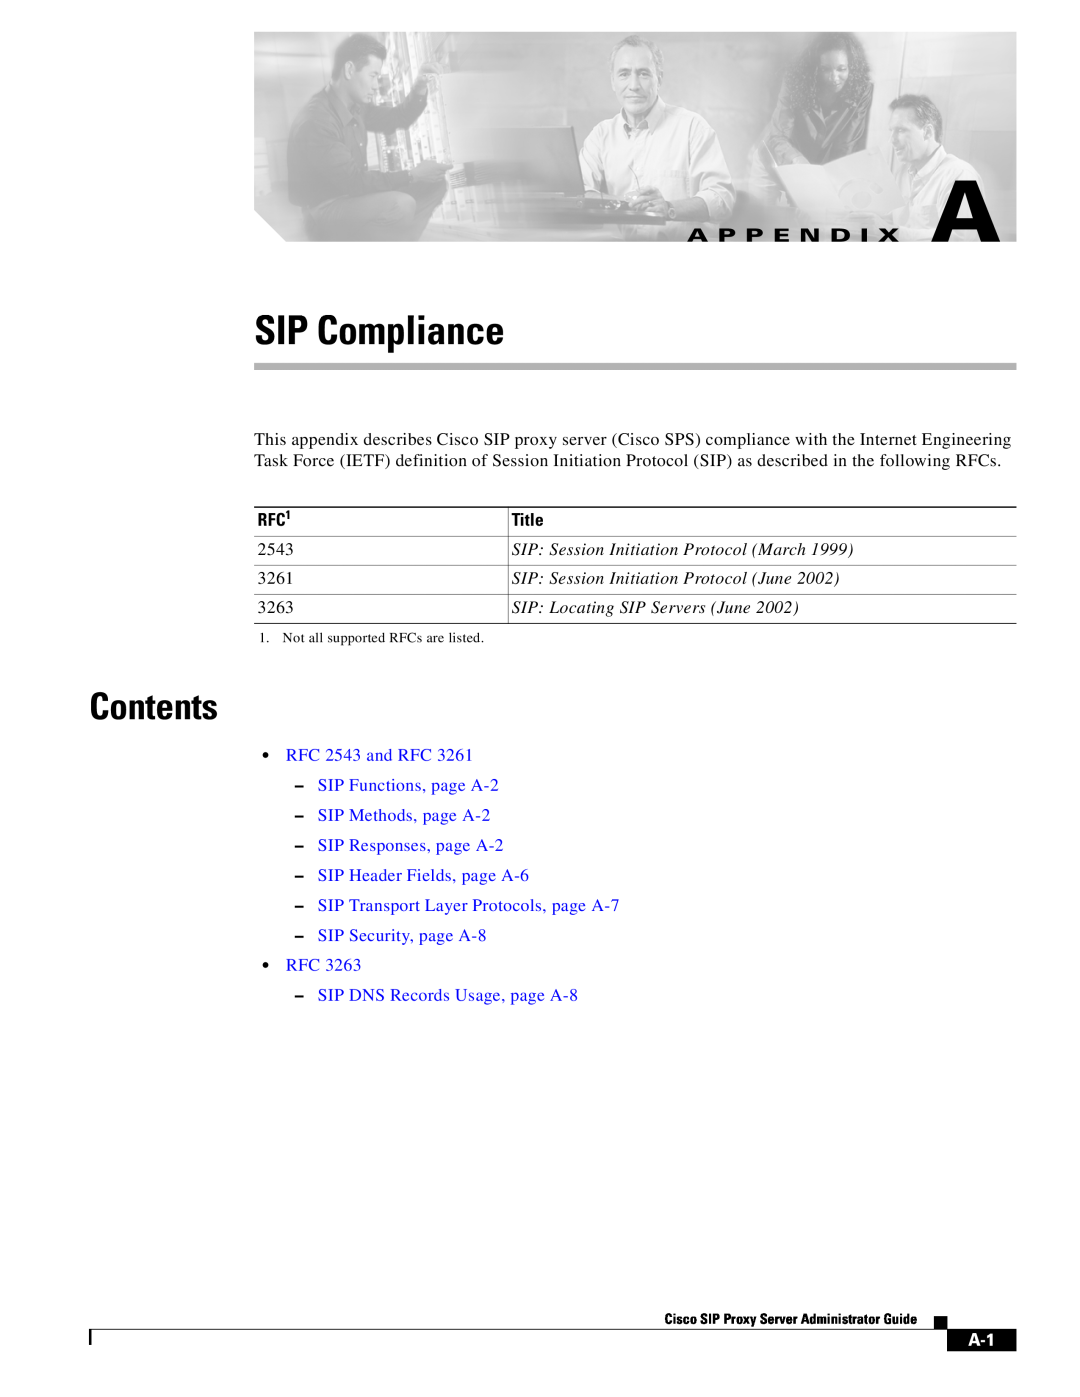 Cisco Systems RFC 2543 and RFC 3261 appendix Contents, RFC1, Title, SIP Compliance, A P P E N D I X A 